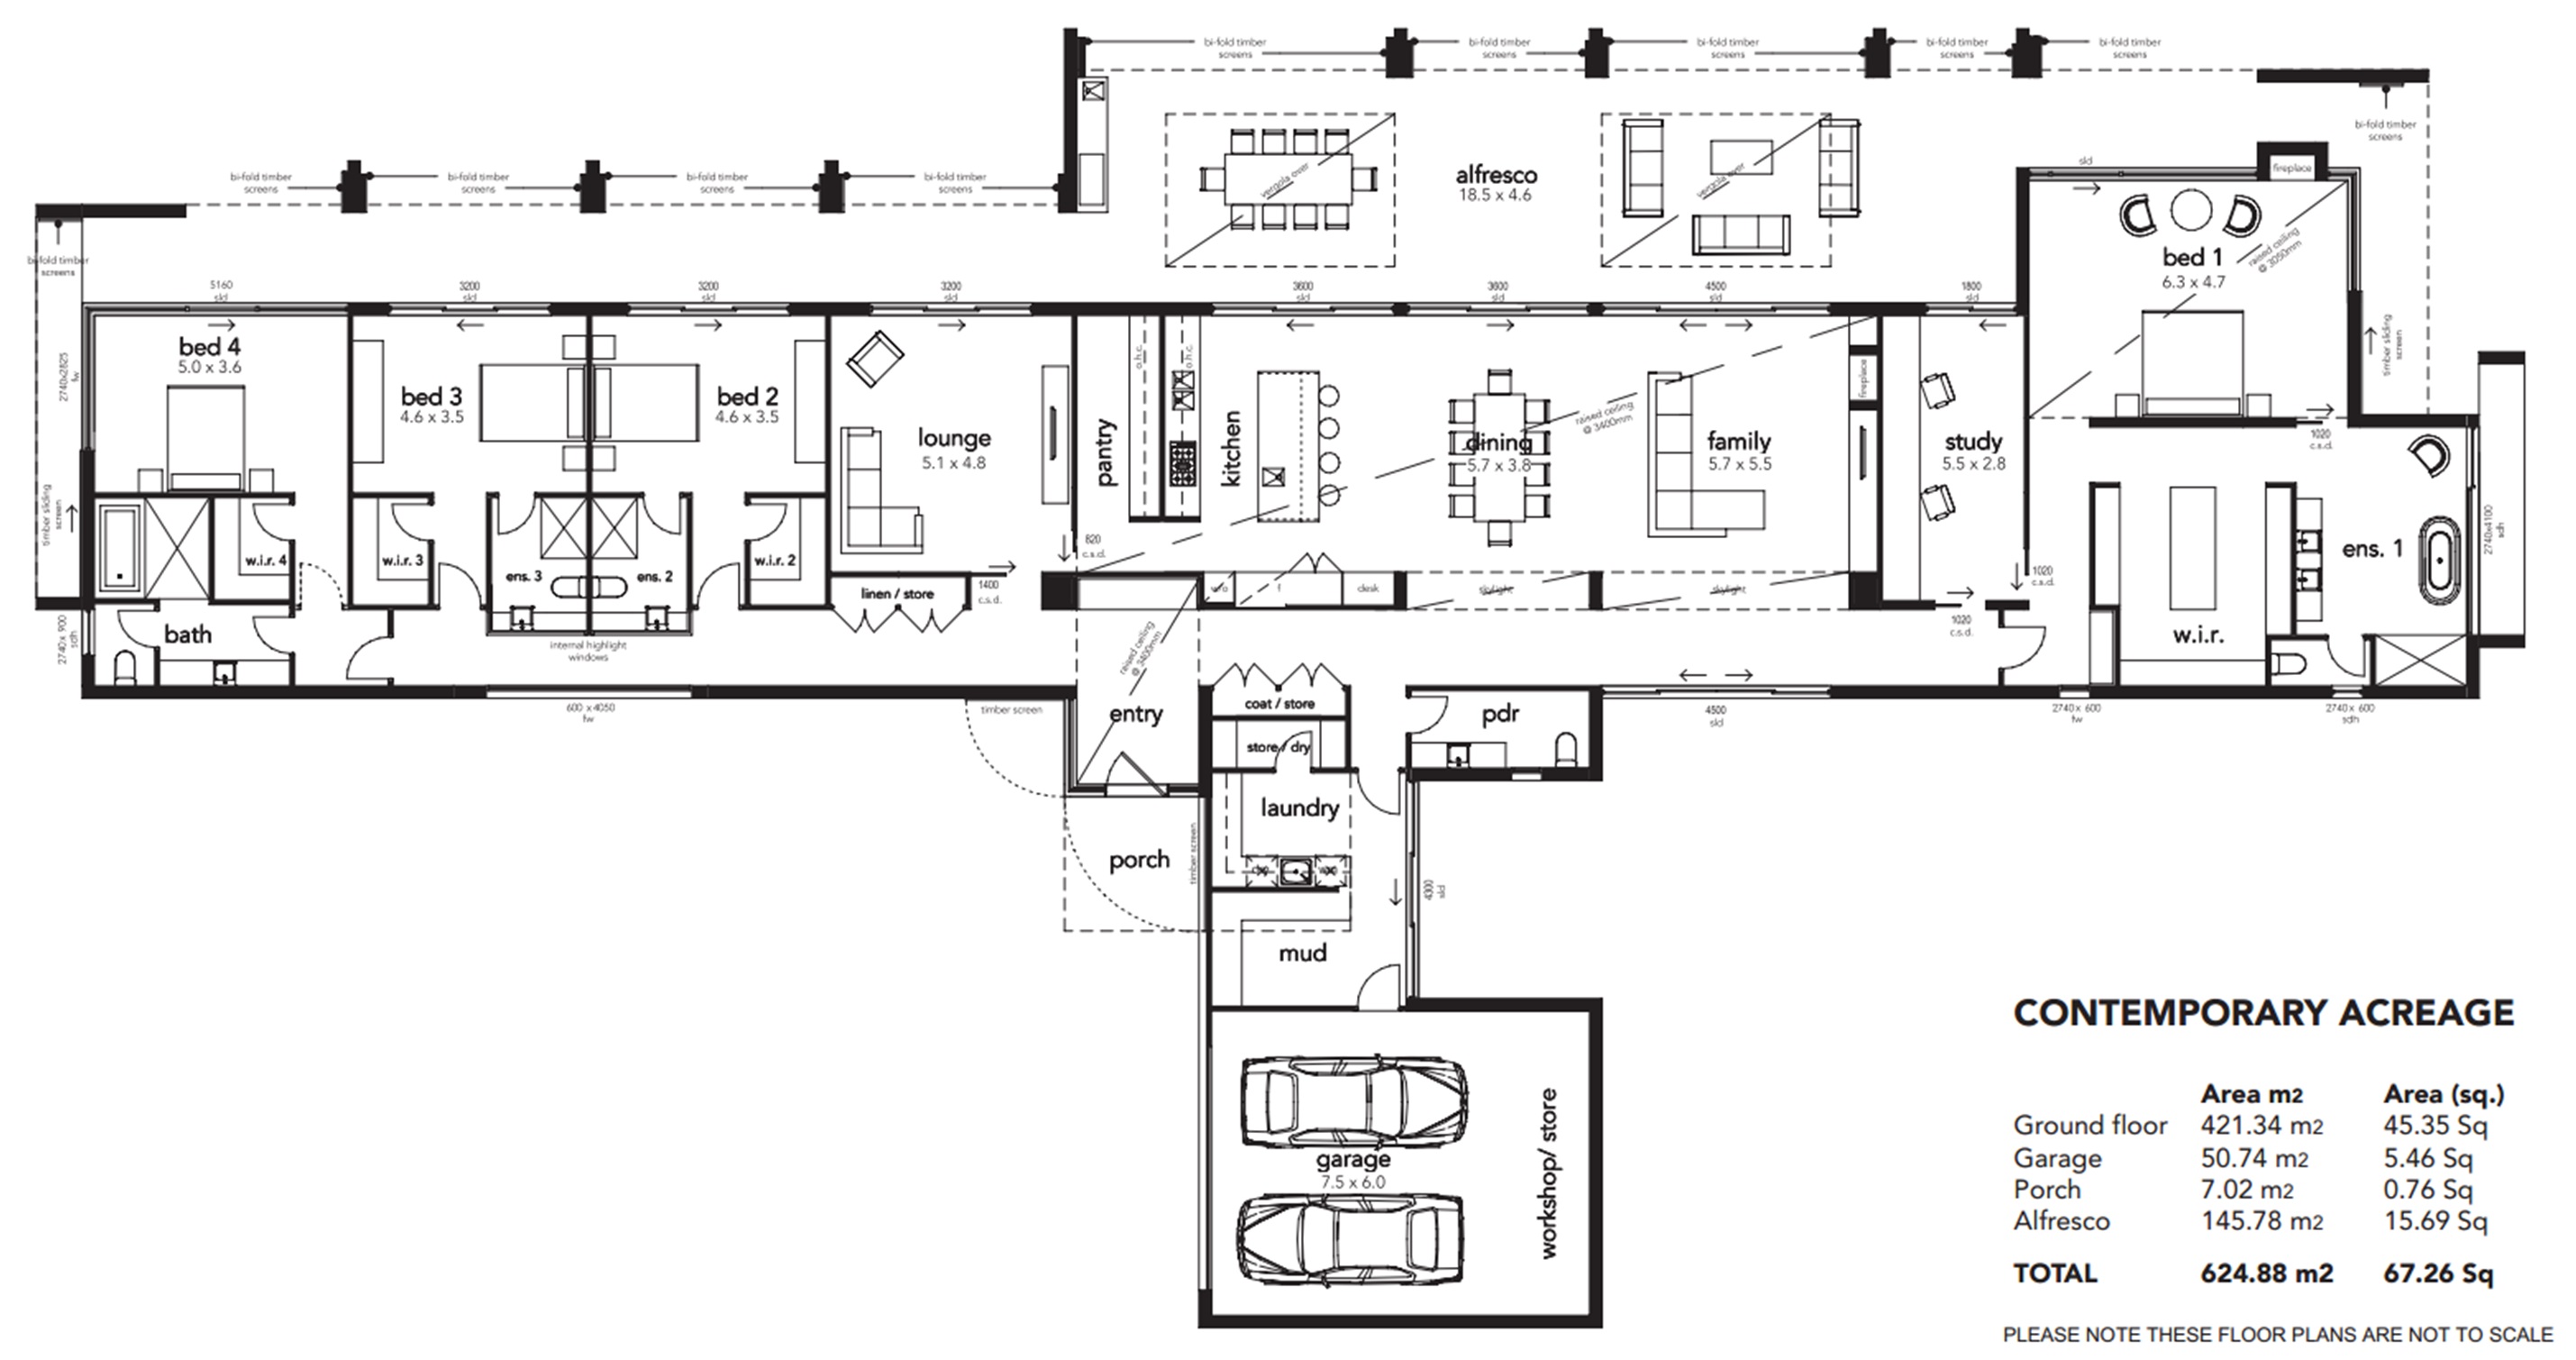 Fresh Prince Of Bel Air House Floor Plan floorplans.click